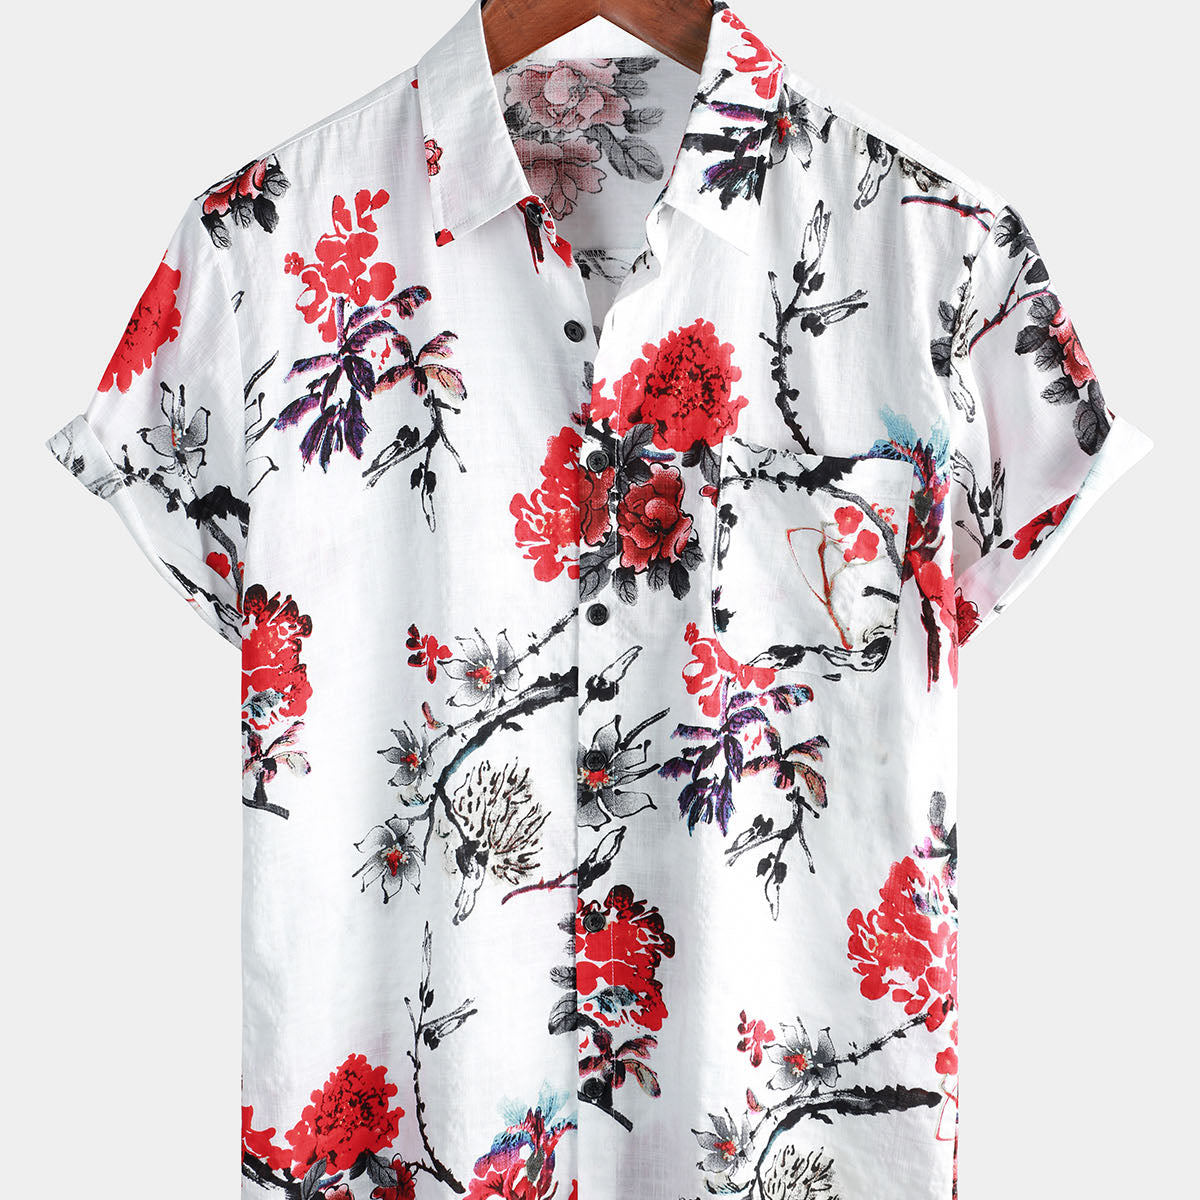 Camisa casual de verano de manga corta con estampado floral Art Cruise Beach para hombre